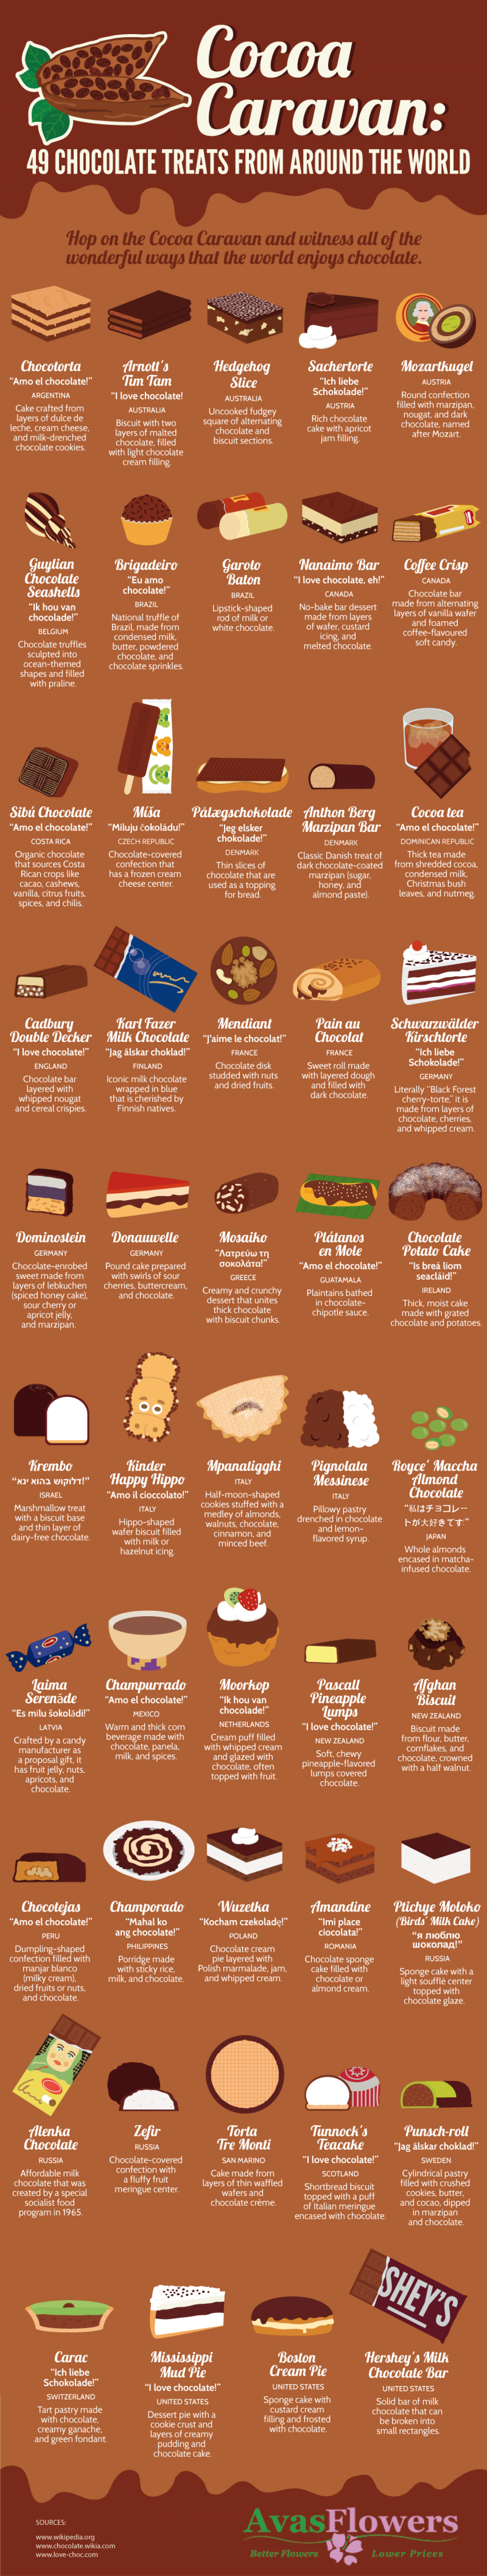 49 Chocolate Treats from Around the World